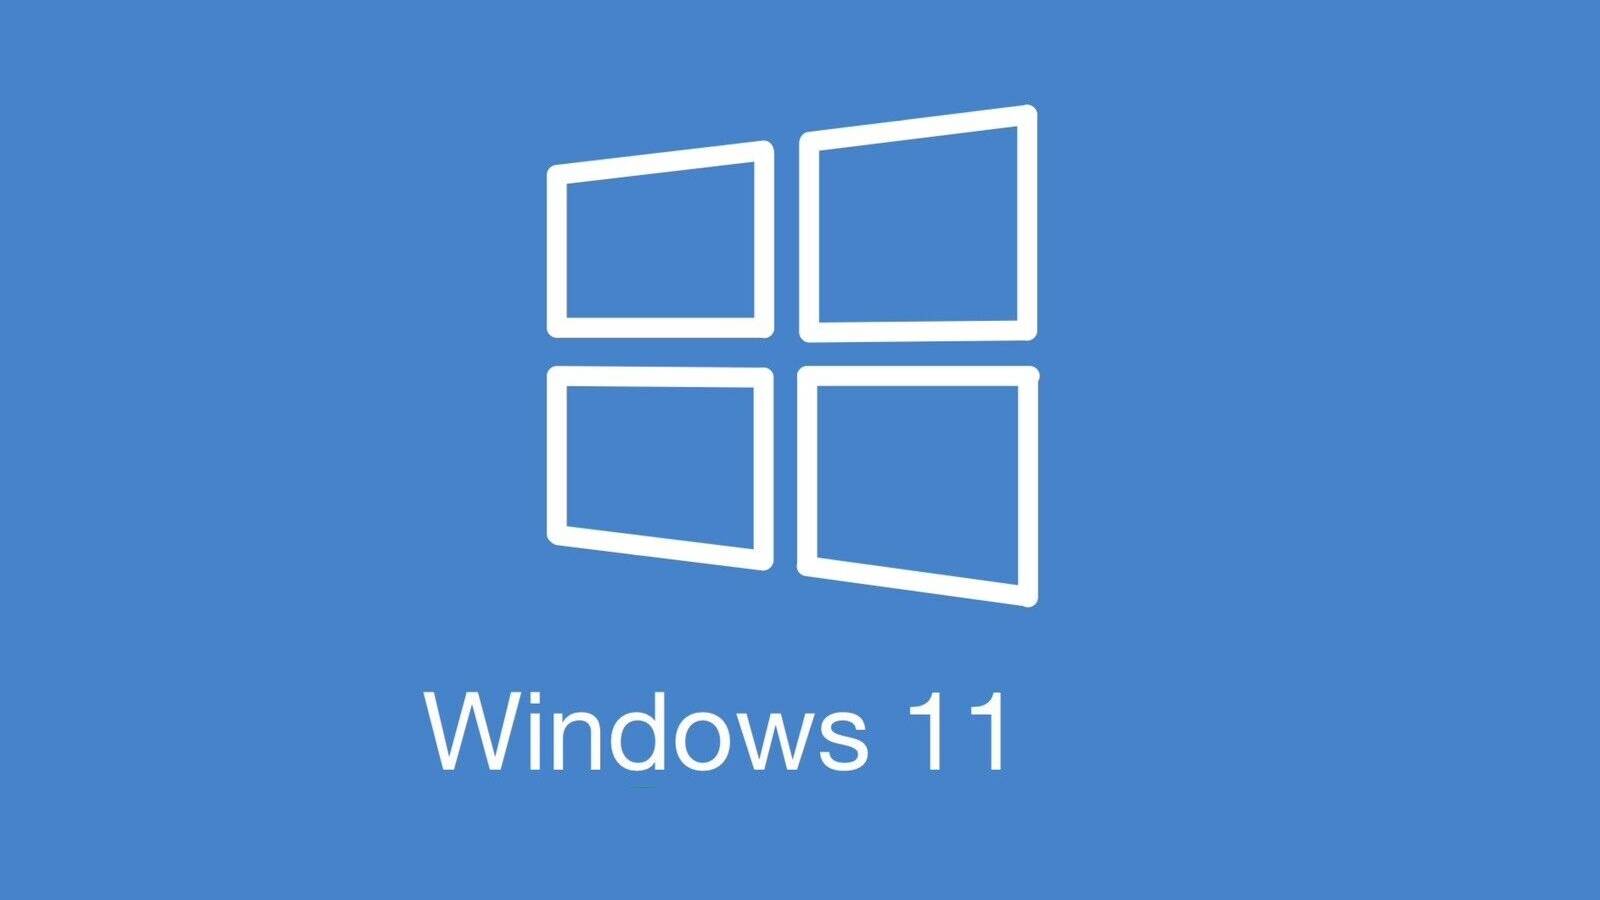 Windows 11 Microsoft Update ufficiale Nuove funzioni Grande importanza